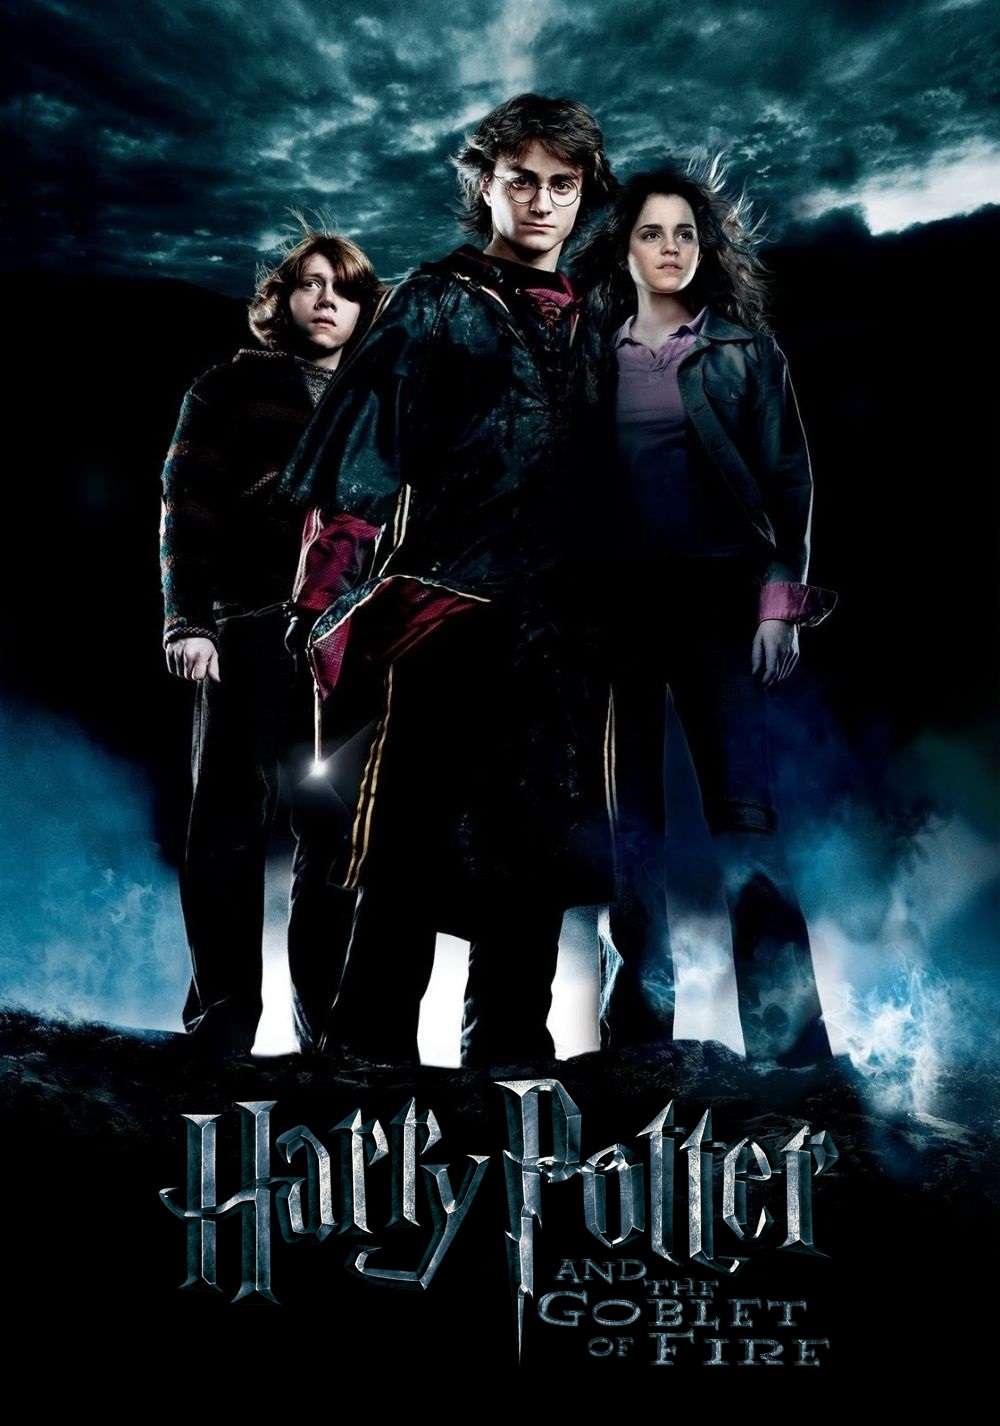 Harry Potter, Goblet of Fire